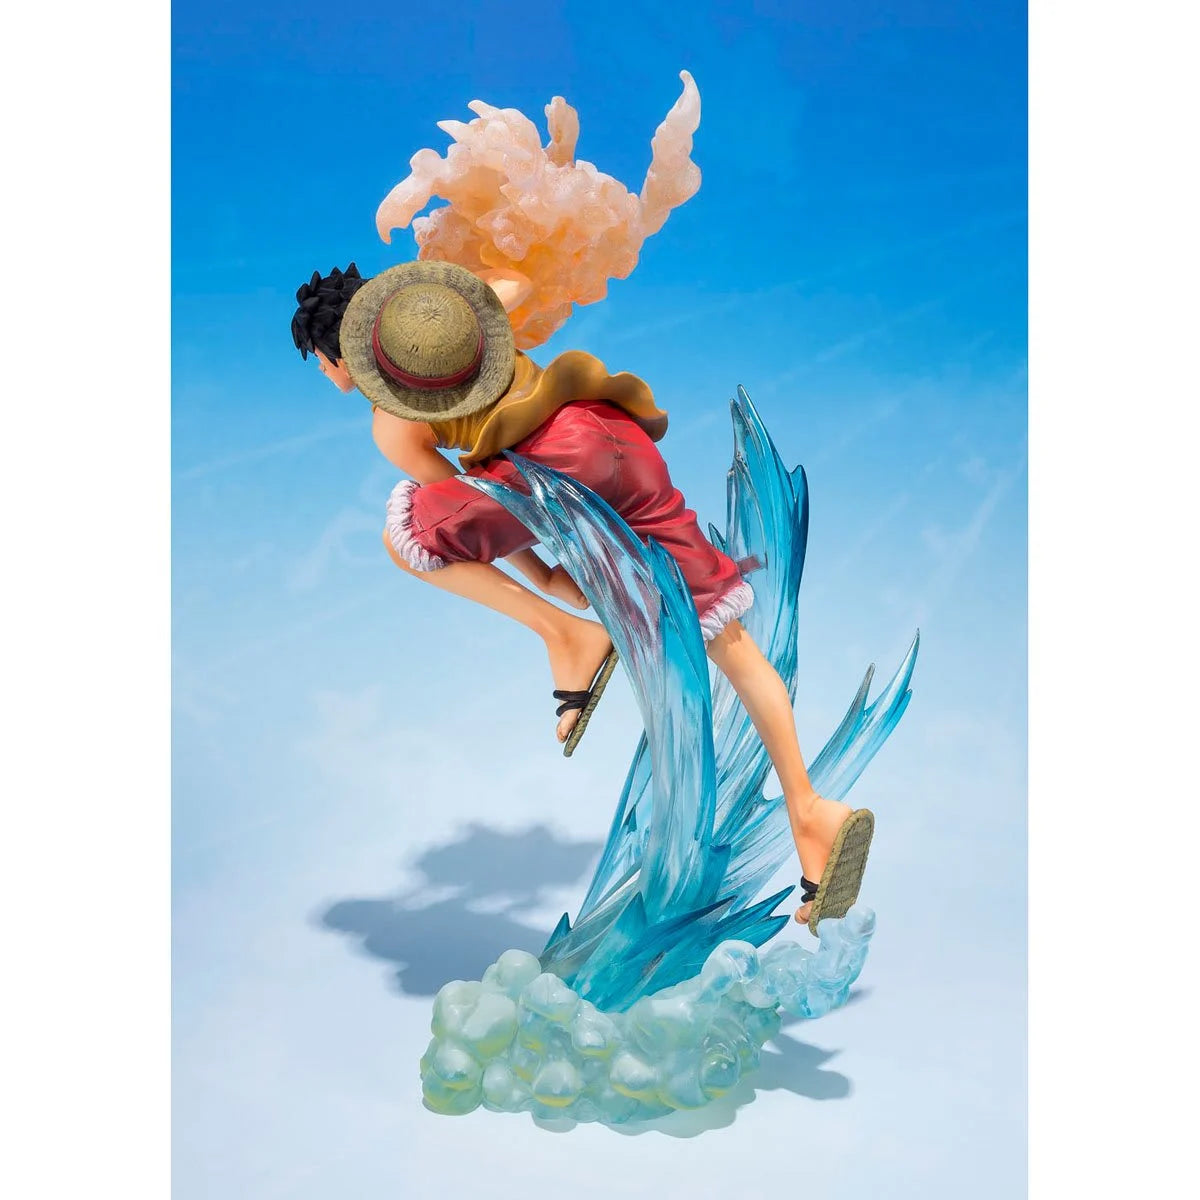 One Piece Monkey D. Luffy Brother's Bond FiguartsZERO Statue by Bandai -Tamashii Nations - India - www.superherotoystore.com